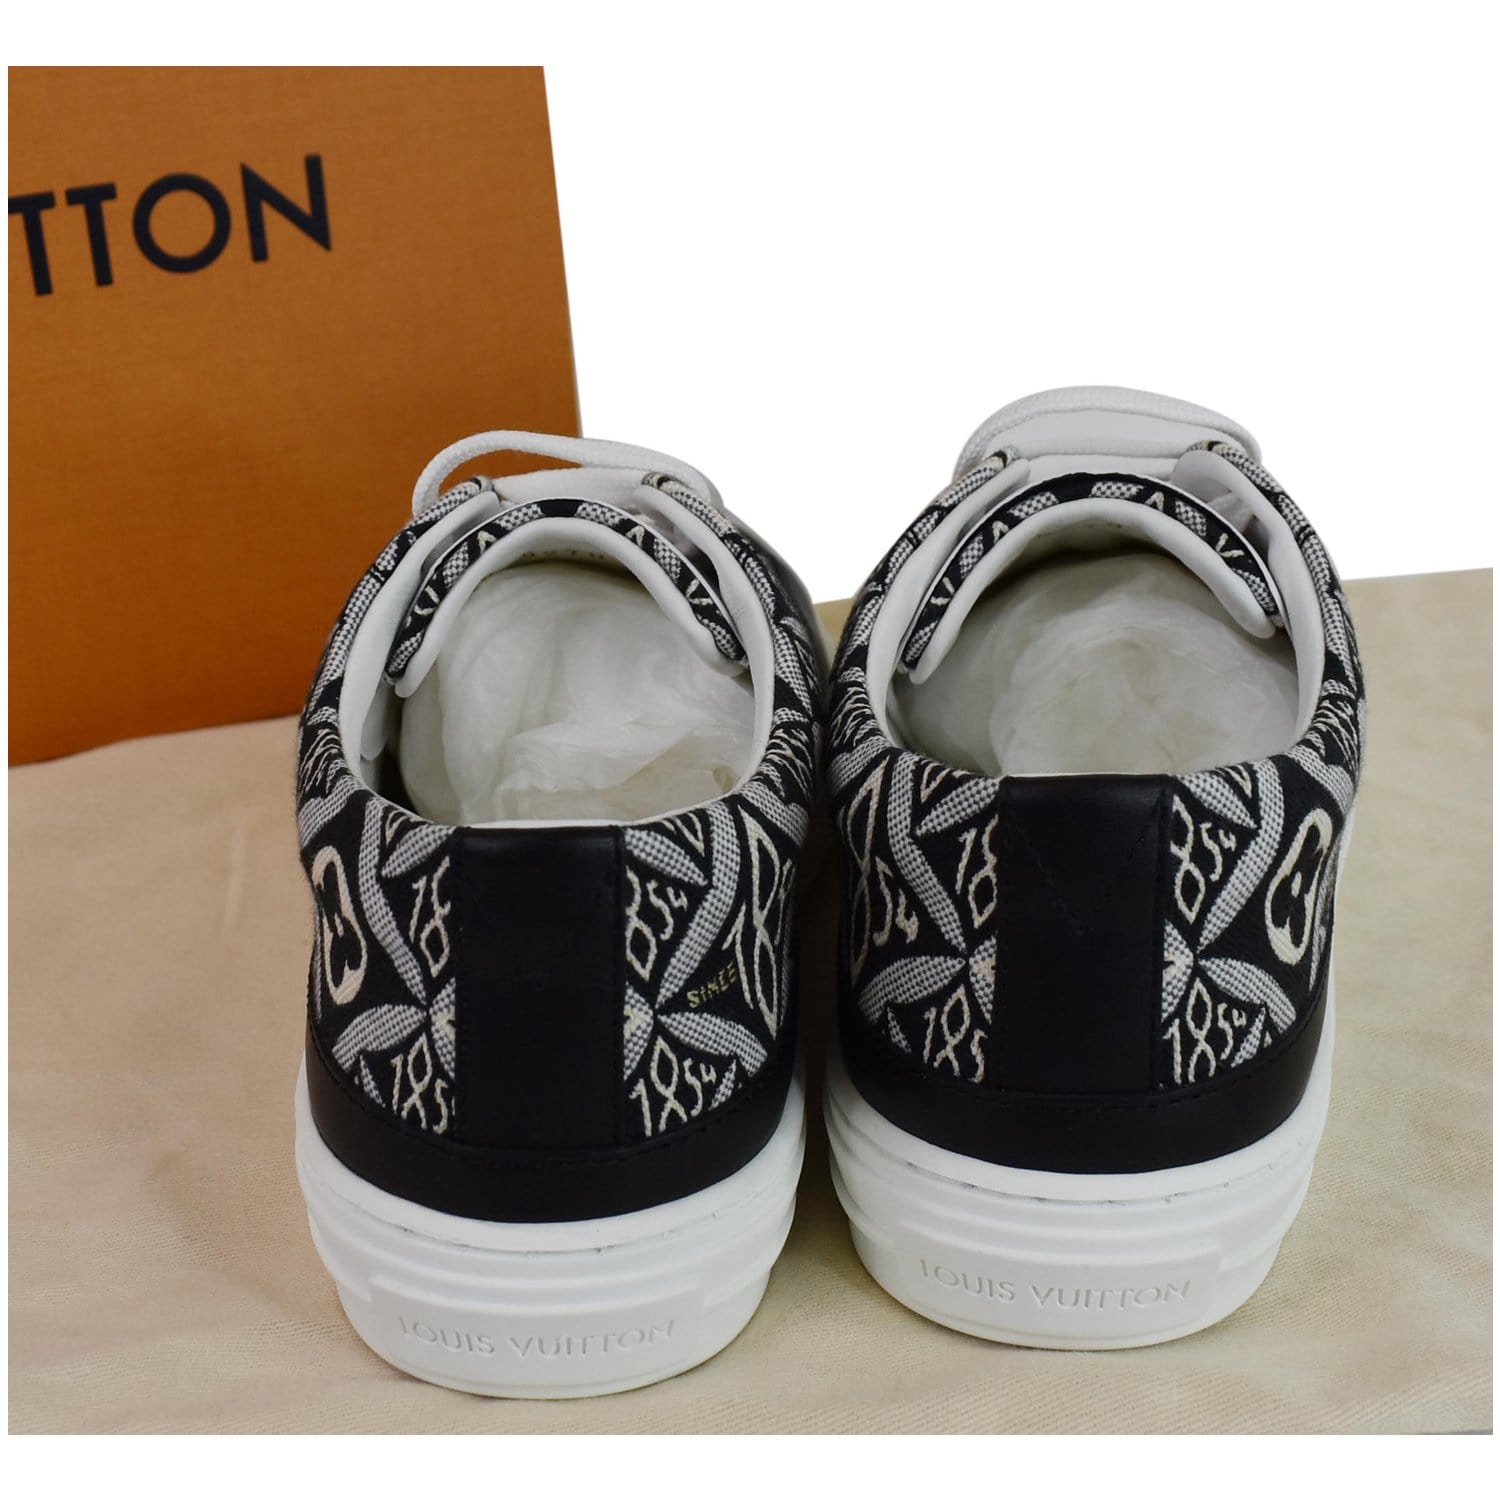 Louis Vuitton LV Monogram Leather Sneakers